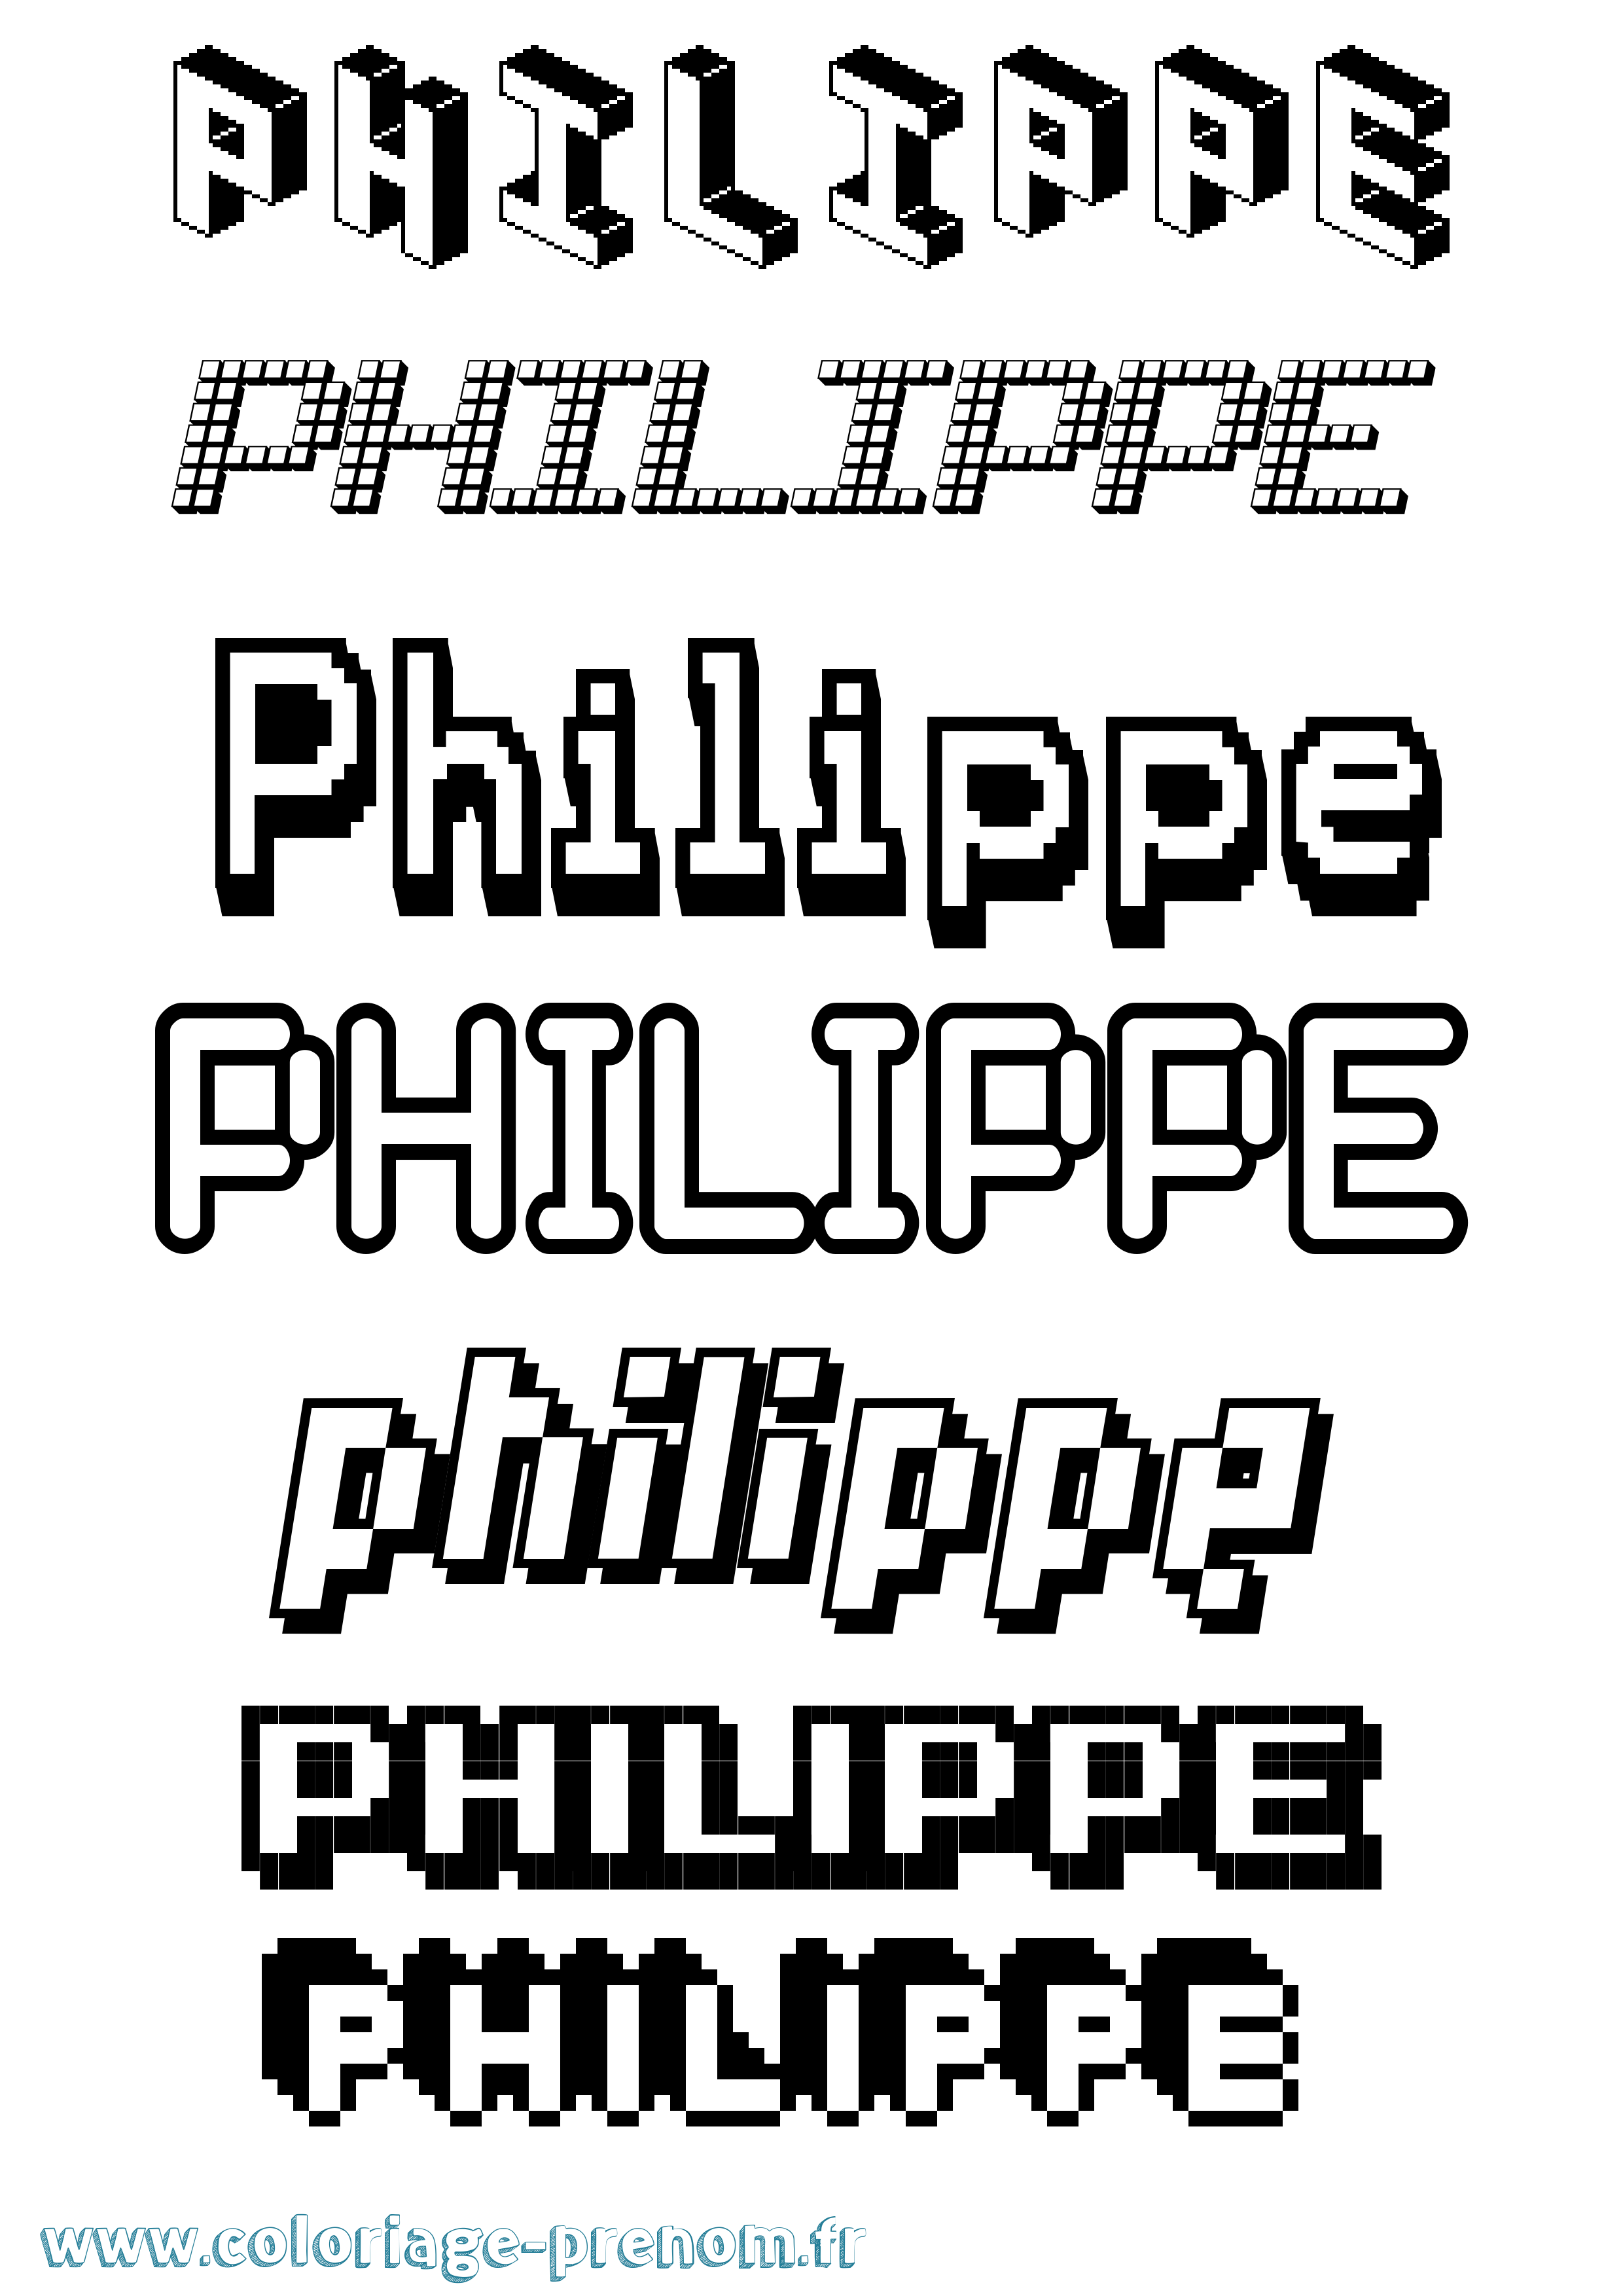 Coloriage prénom Philippe Pixel